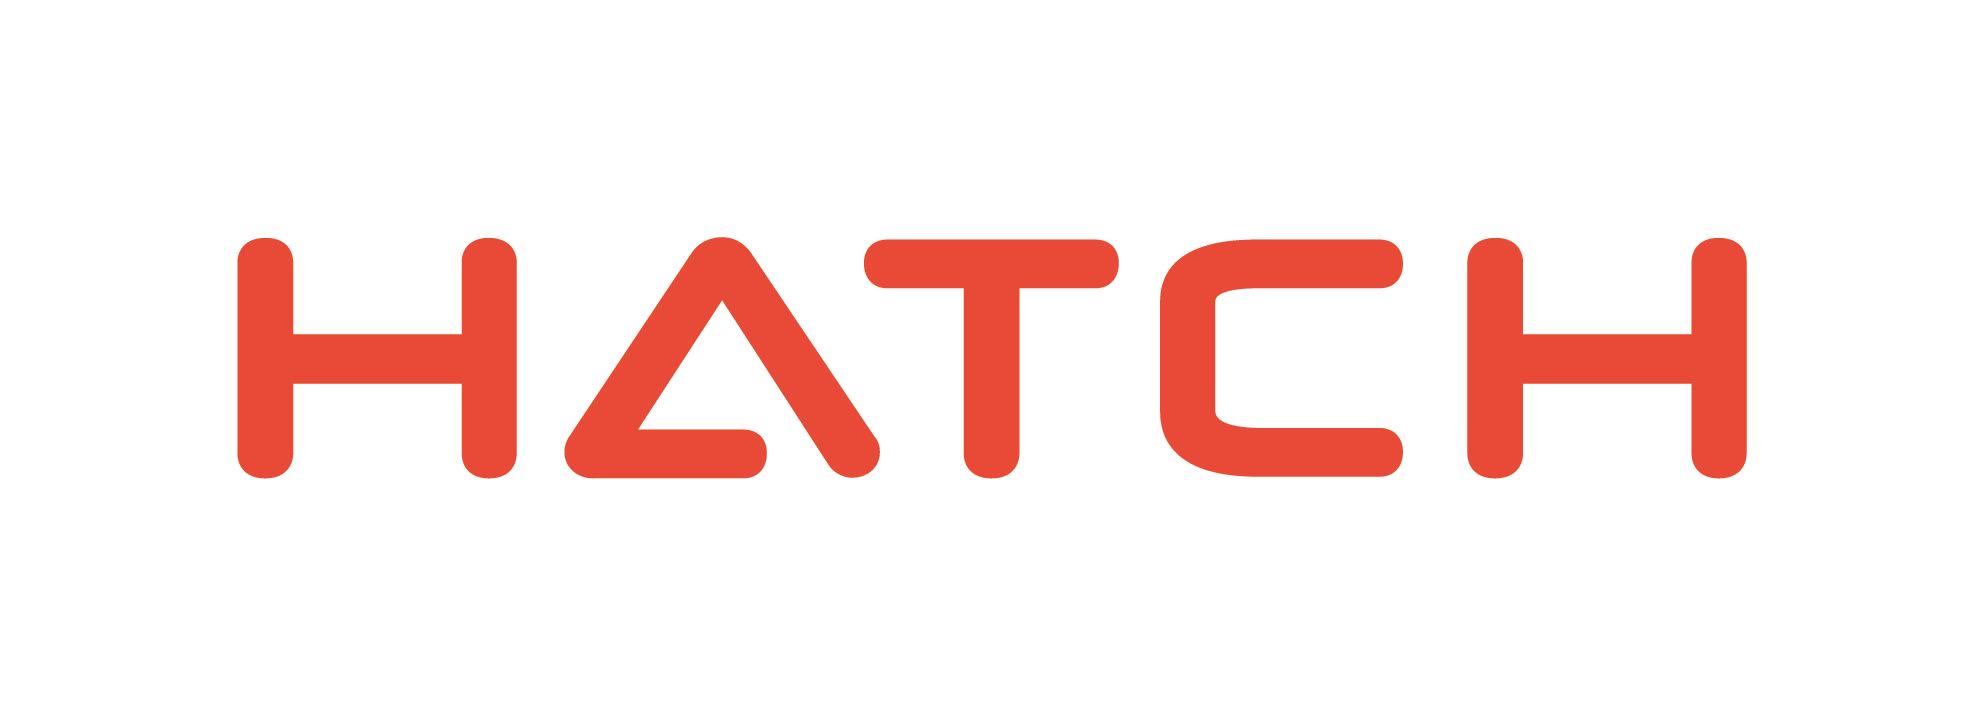 Hatch-logo.jpg